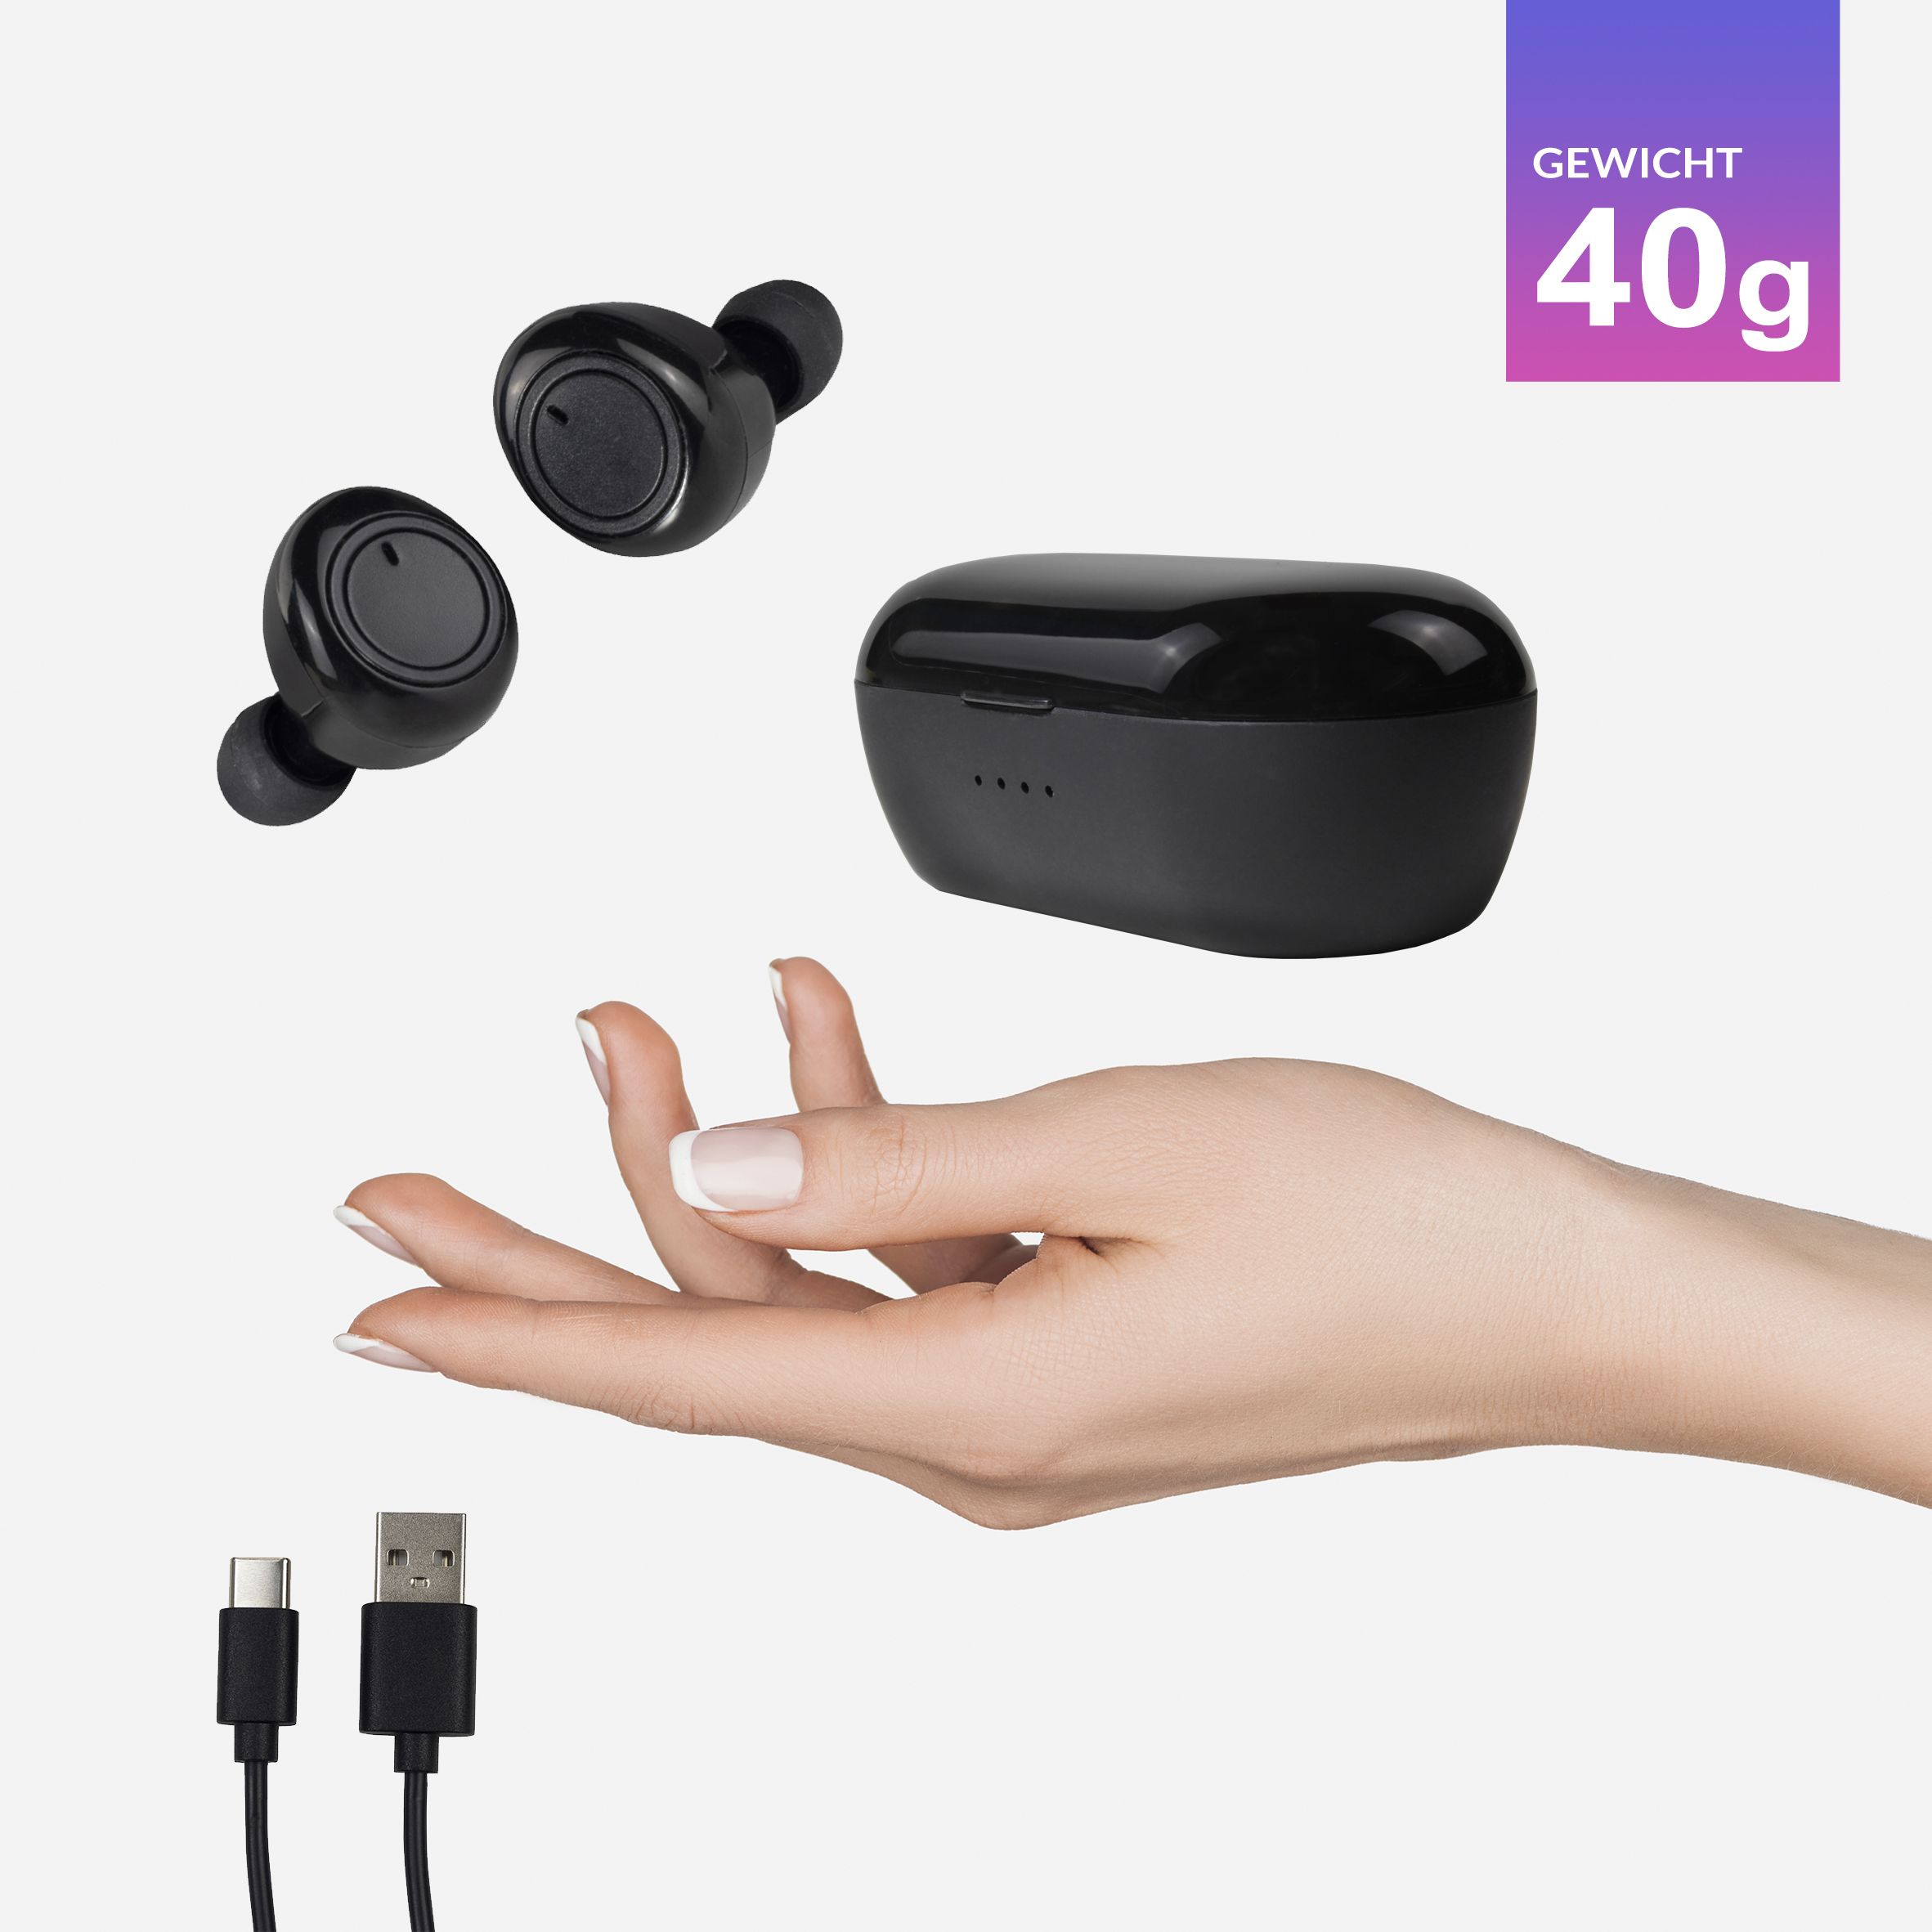 XORO XORO KHB 25 Bluetooth In-ear HSP, Black Bluetooth integriertem mit HFP separater In-Ear-Kopfhörer Akku Ladebox & In-Ear-Kopfhörer Kabelloser